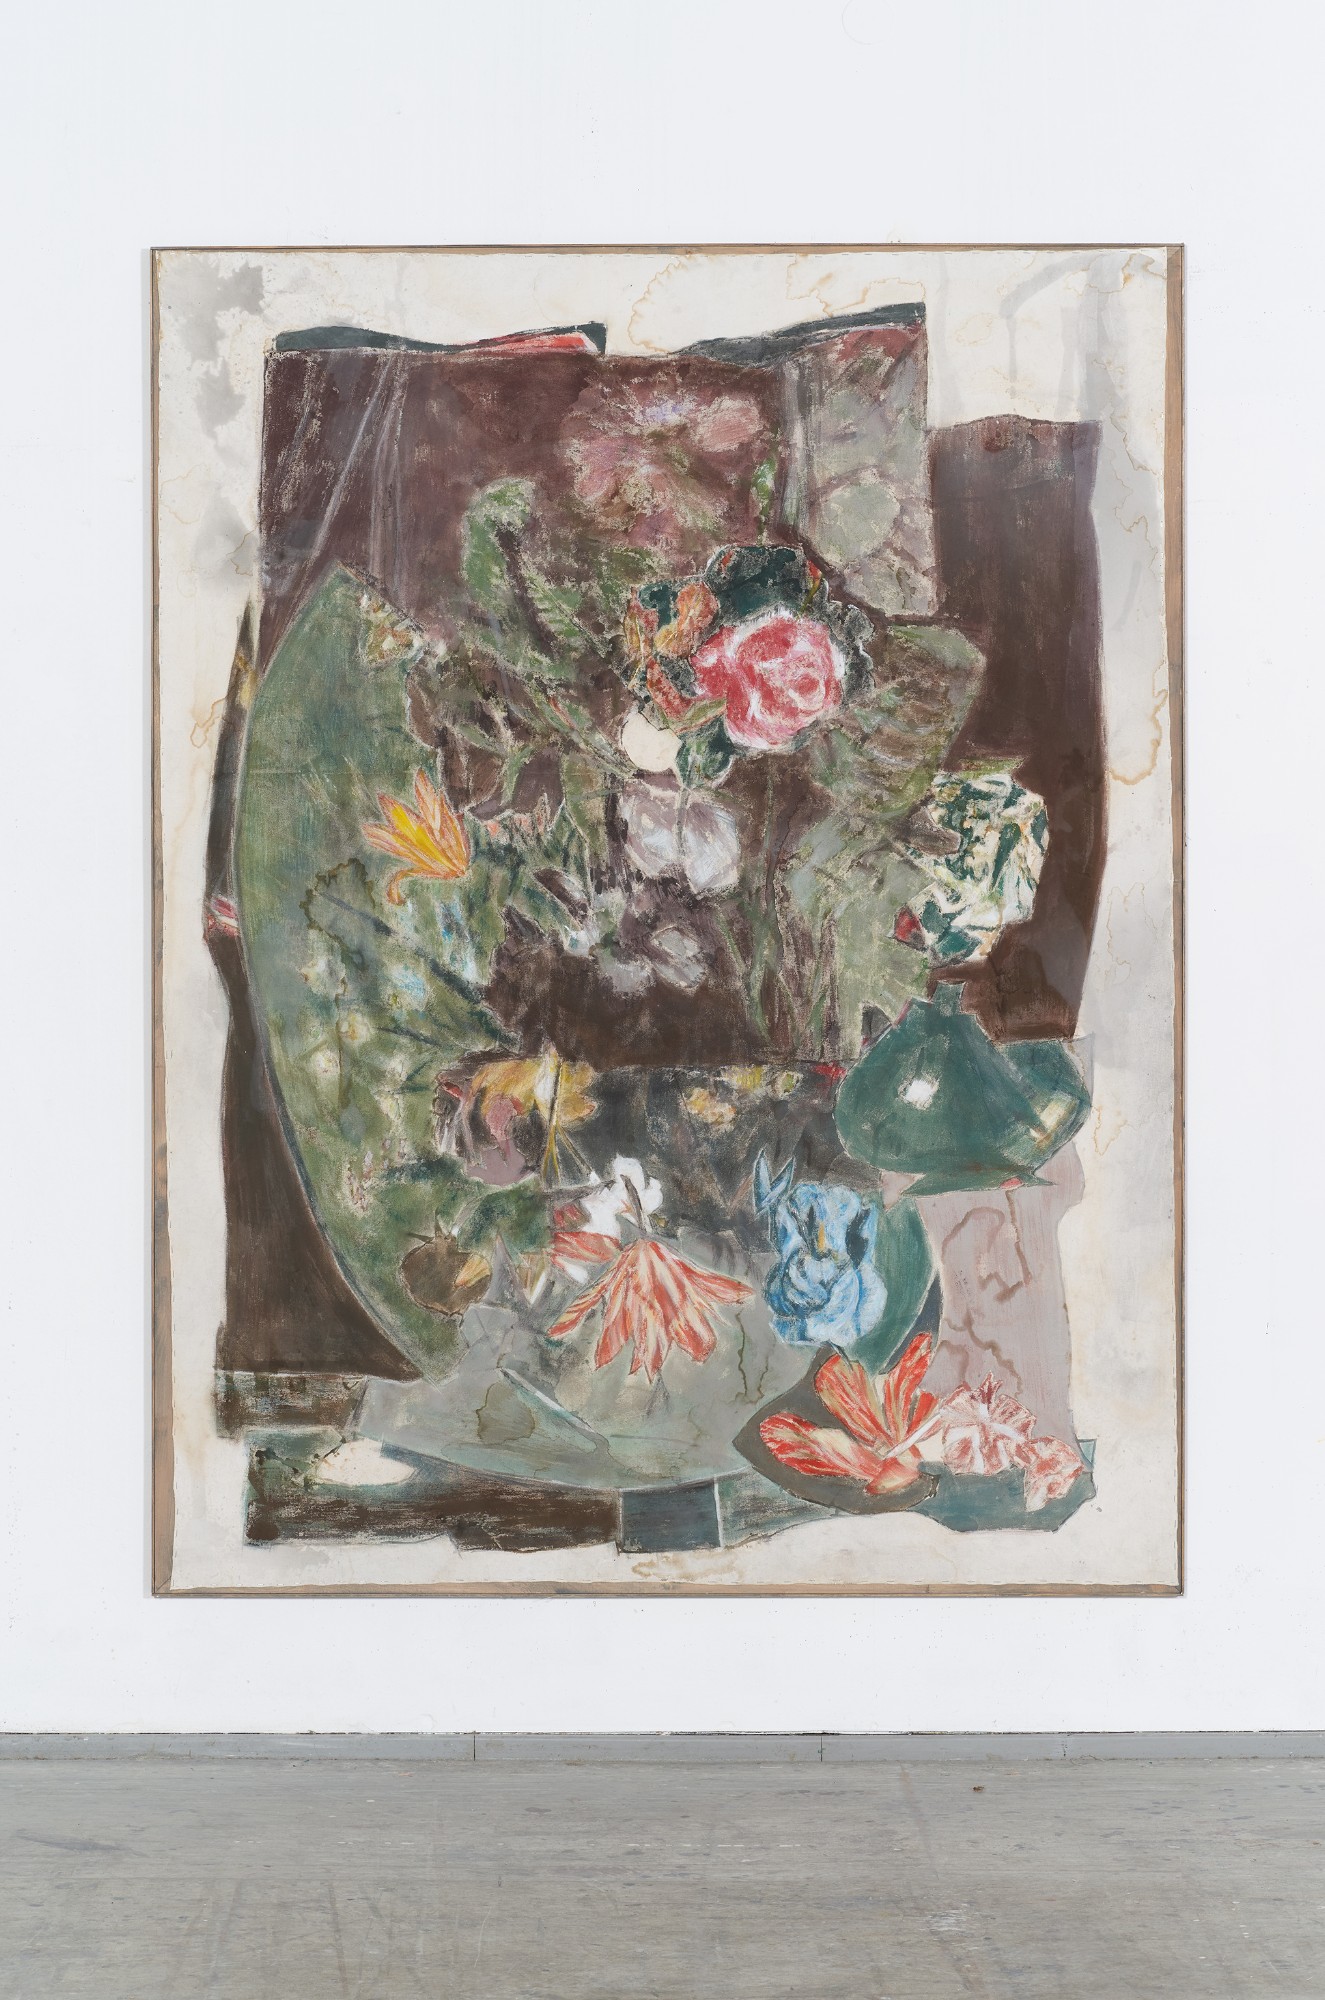 Erwin Gross, Untitled, 2016, acrylic, pigment on cotton, 224 x 171 cm